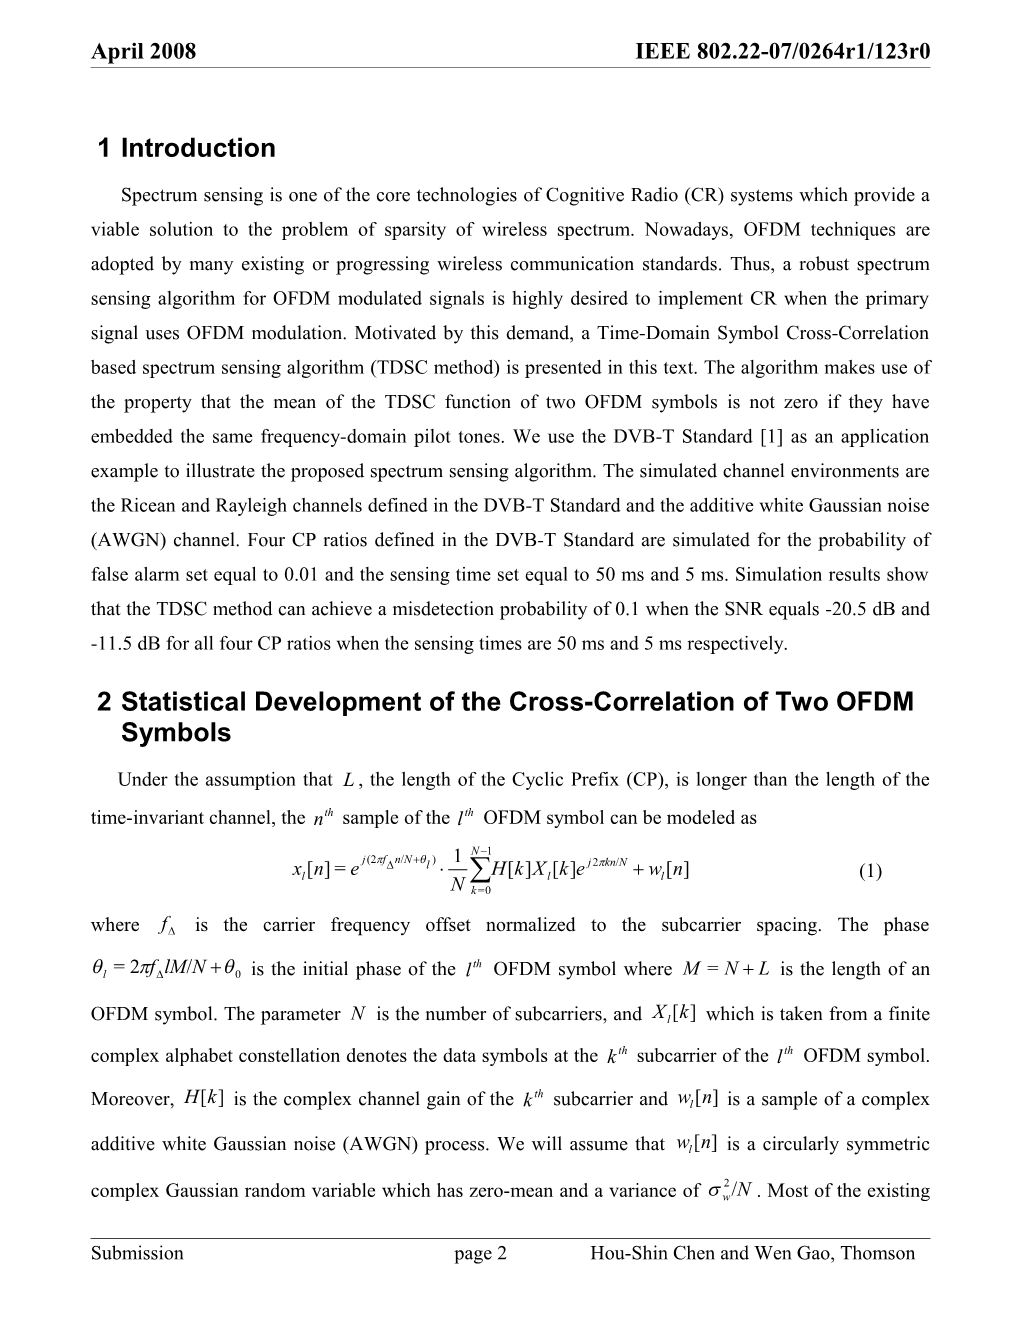 2Statistical Development of the Cross-Correlation of Two OFDM Symbols